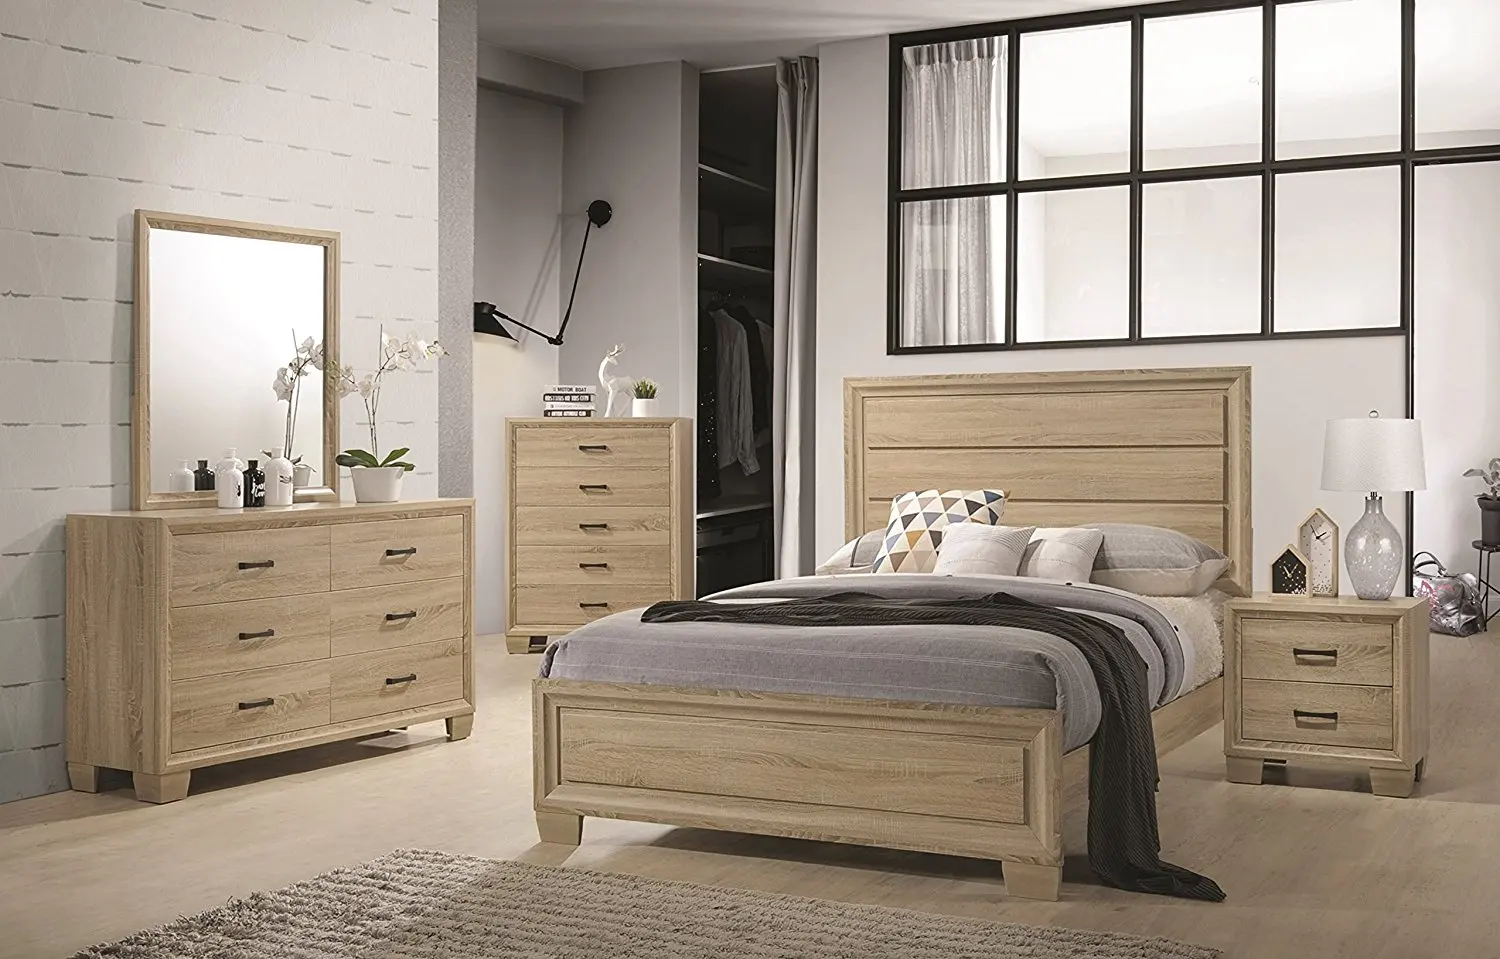 Cheap White And Oak Bedroom Furniture Find White And Oak Bedroom Furniture Deals On Line At Alibaba Com